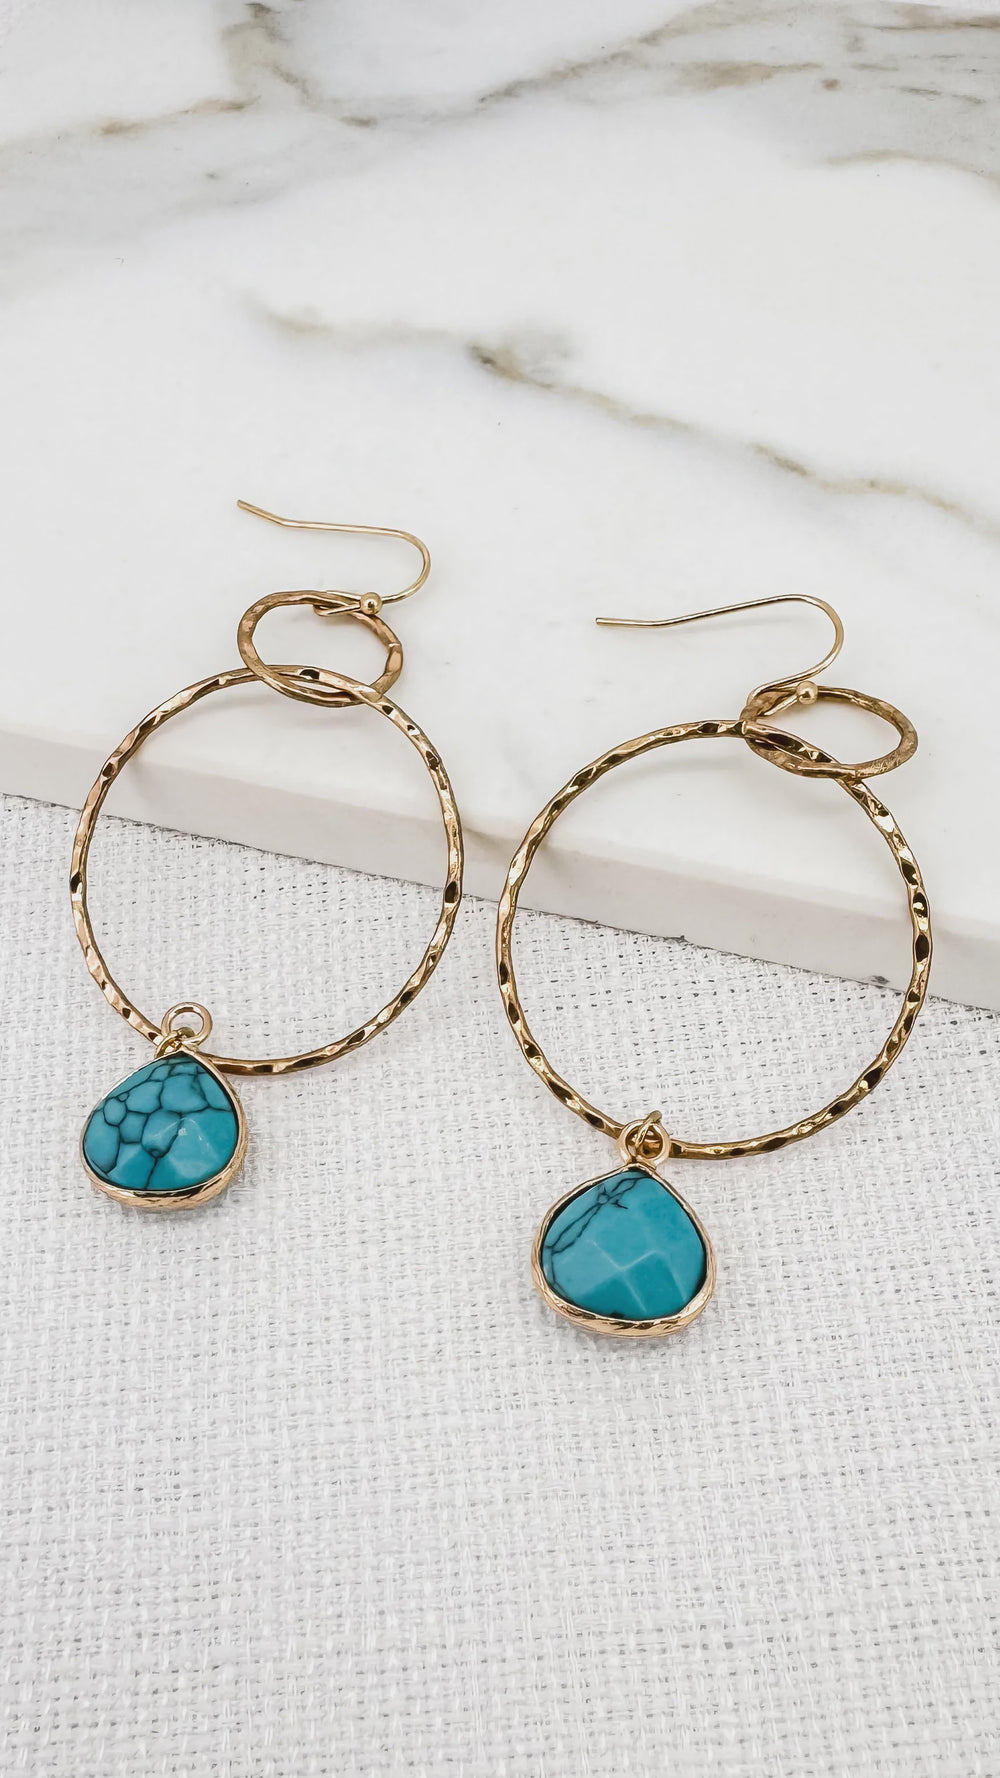 Double Hoop Gold Earrings - Turquoise